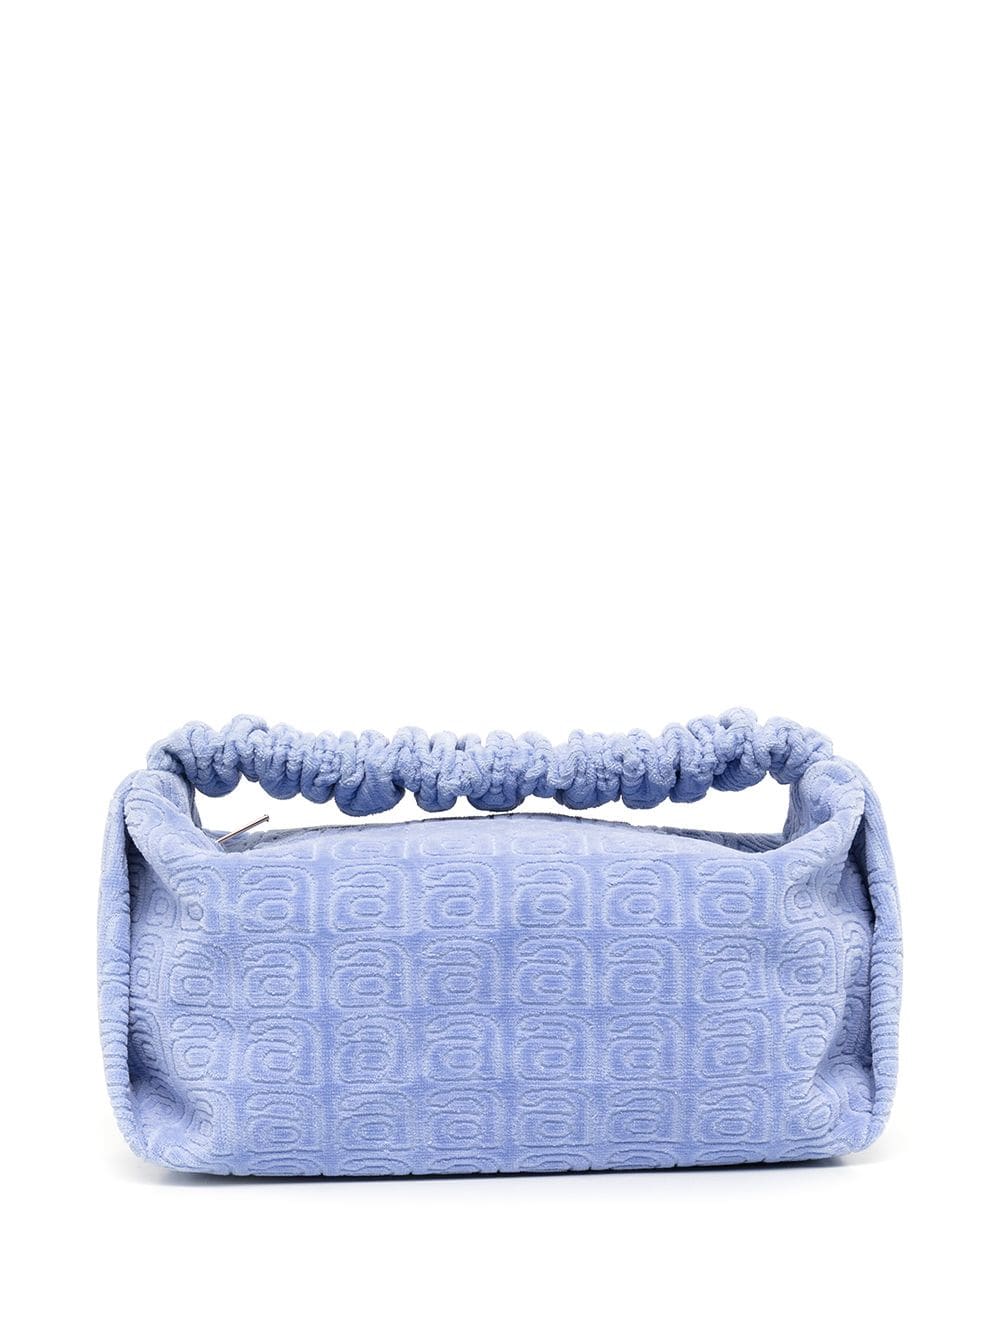 Alexander Wang small Scrunchie mini bag (Size: OS) product